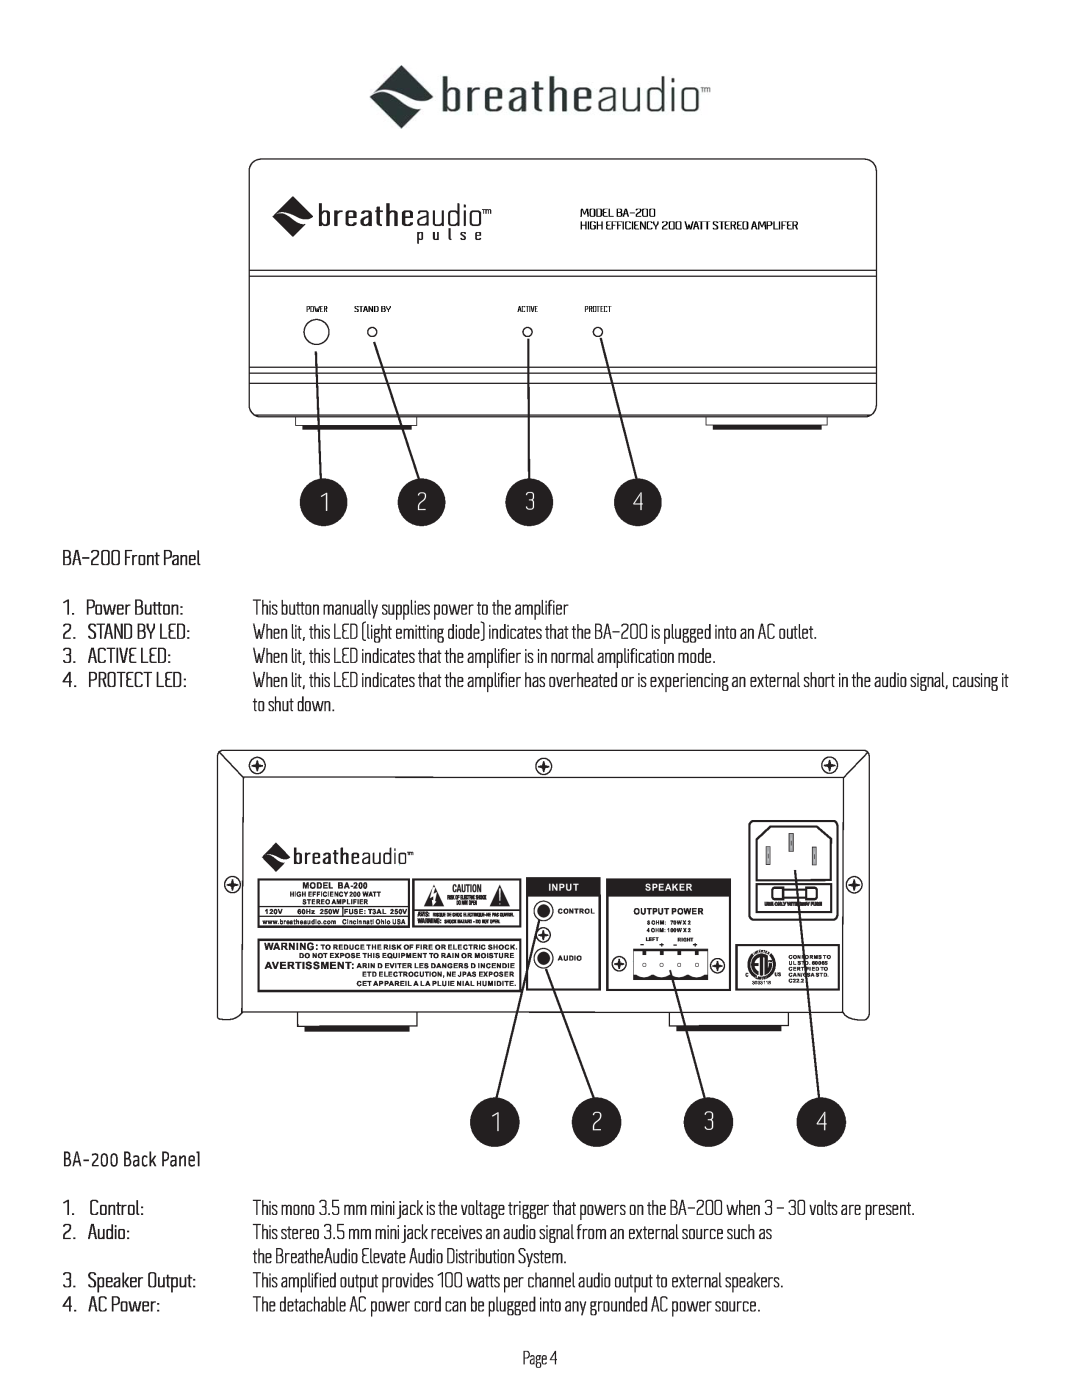 BreatheAudio owner manual BA-200Front Panel, BA-200Back Panel, Control, Audio 